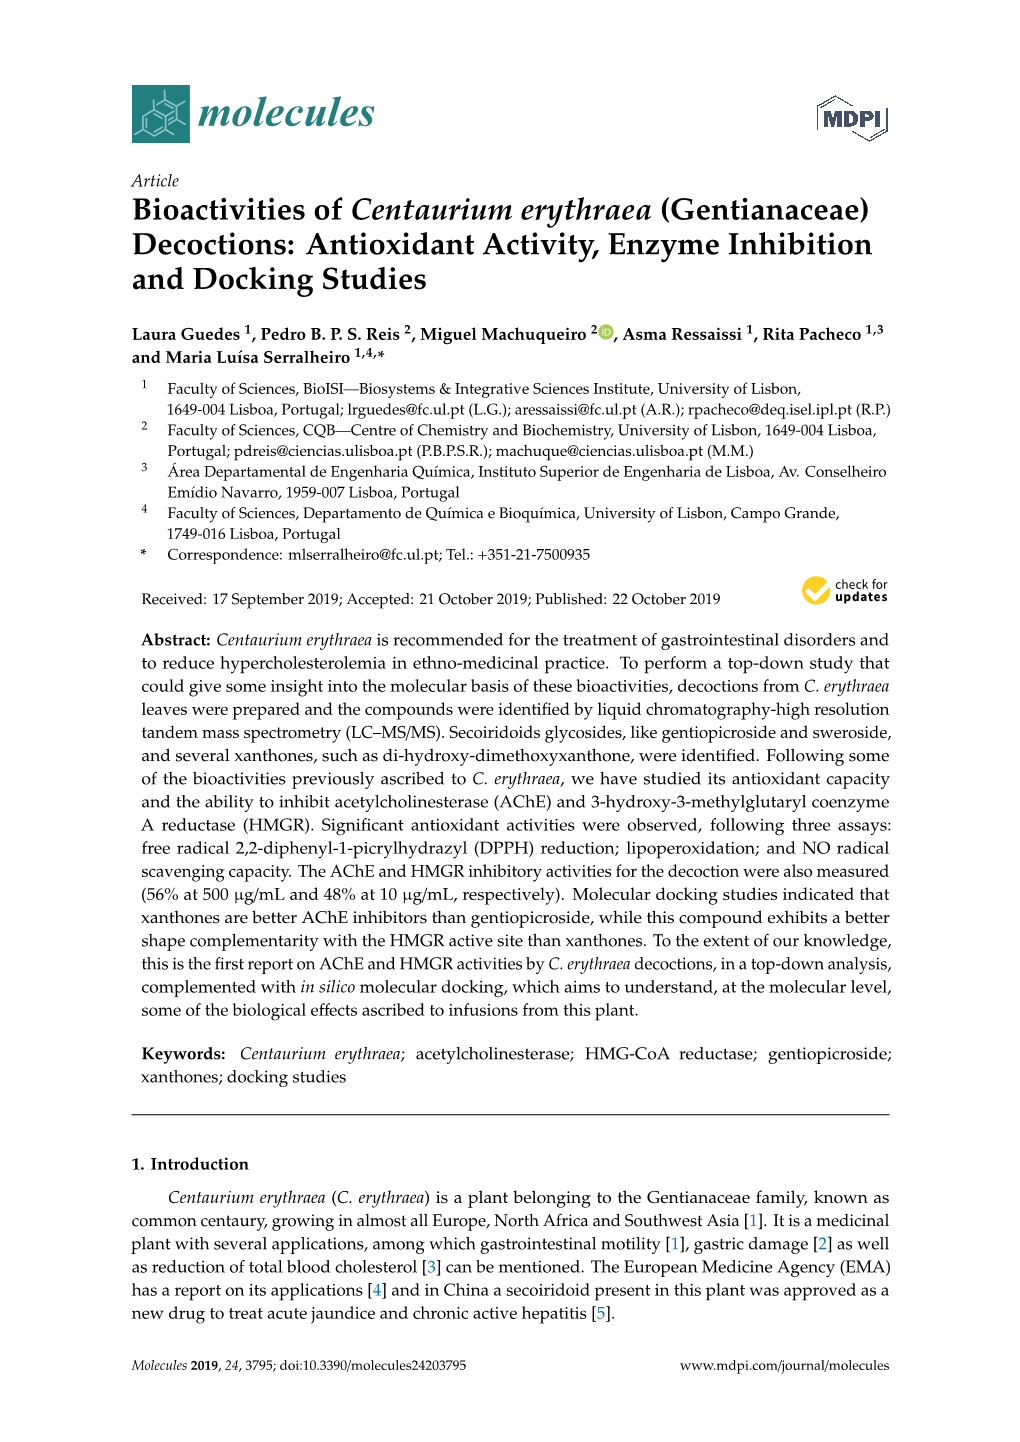 Bioactivities of Centaurium Erythraea (Gentianaceae) Decoctions: Antioxidant Activity, Enzyme Inhibition and Docking Studies